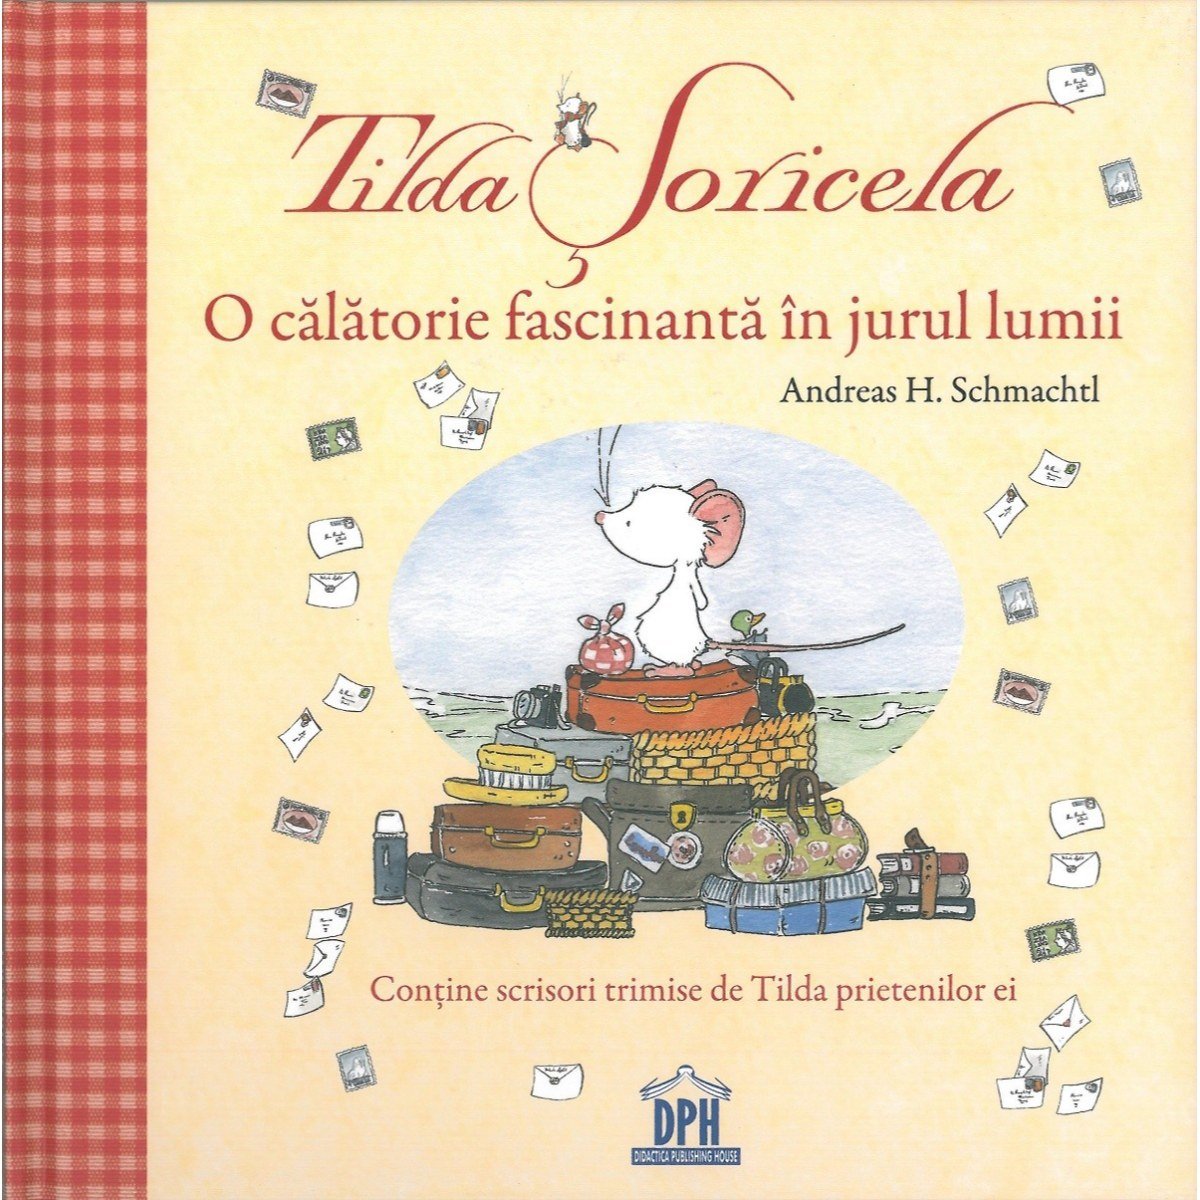 Tilda Soricela, O calatorie fascinanta in jurul lumii, Andreas H. Schmachtl